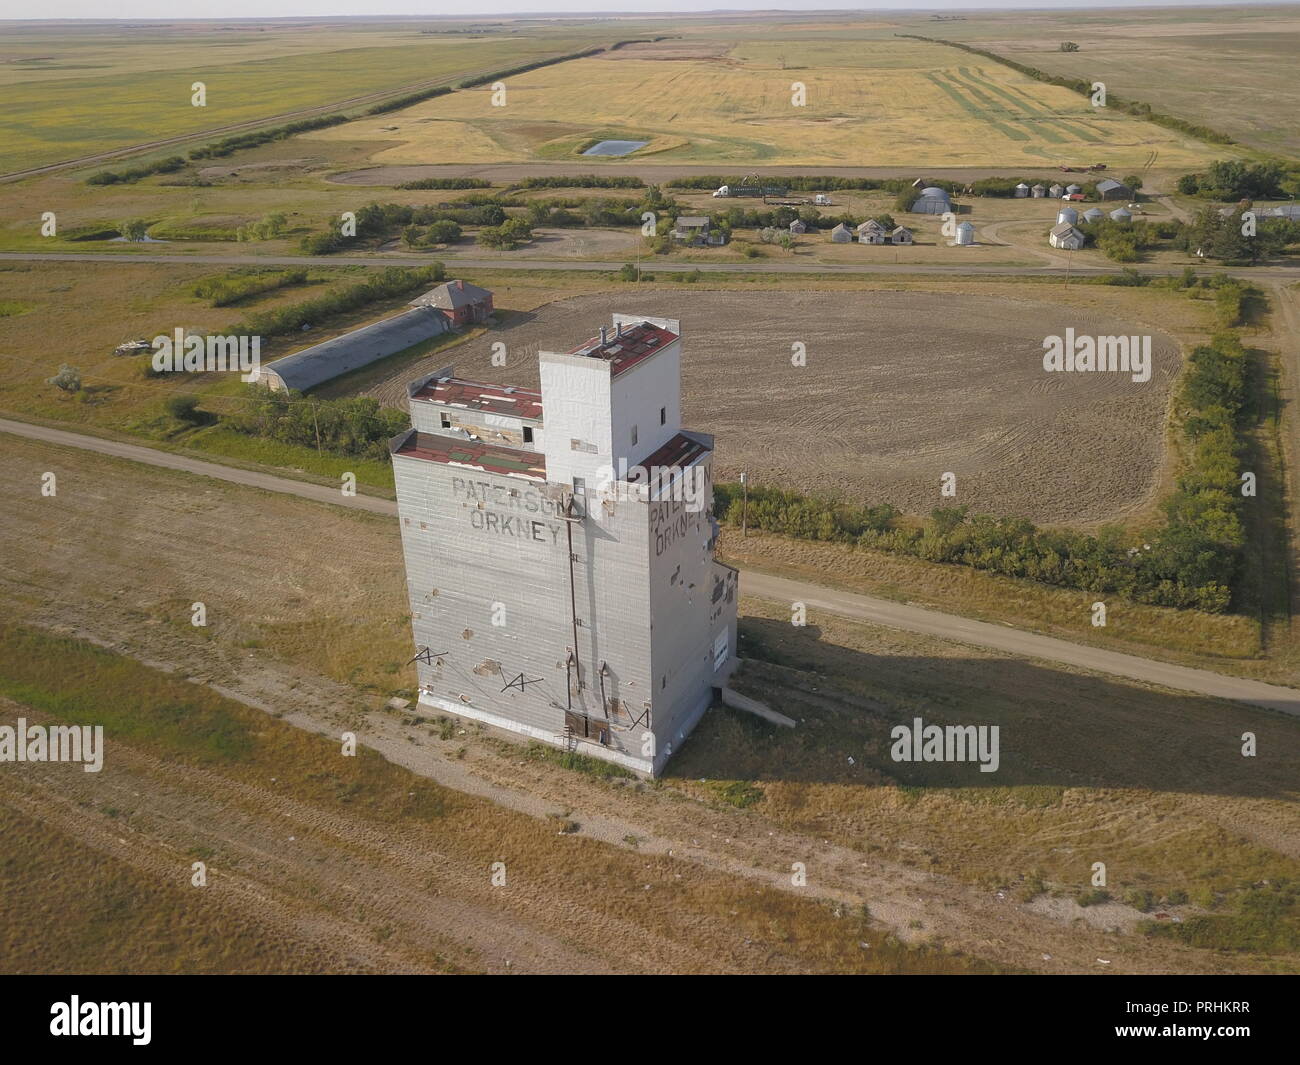 Abandoned, Patterson Orkney grain elevator, Orkney, Saskatchewan, Canada, Palliser Triangle, Brian Martin RMSF Stock Photo